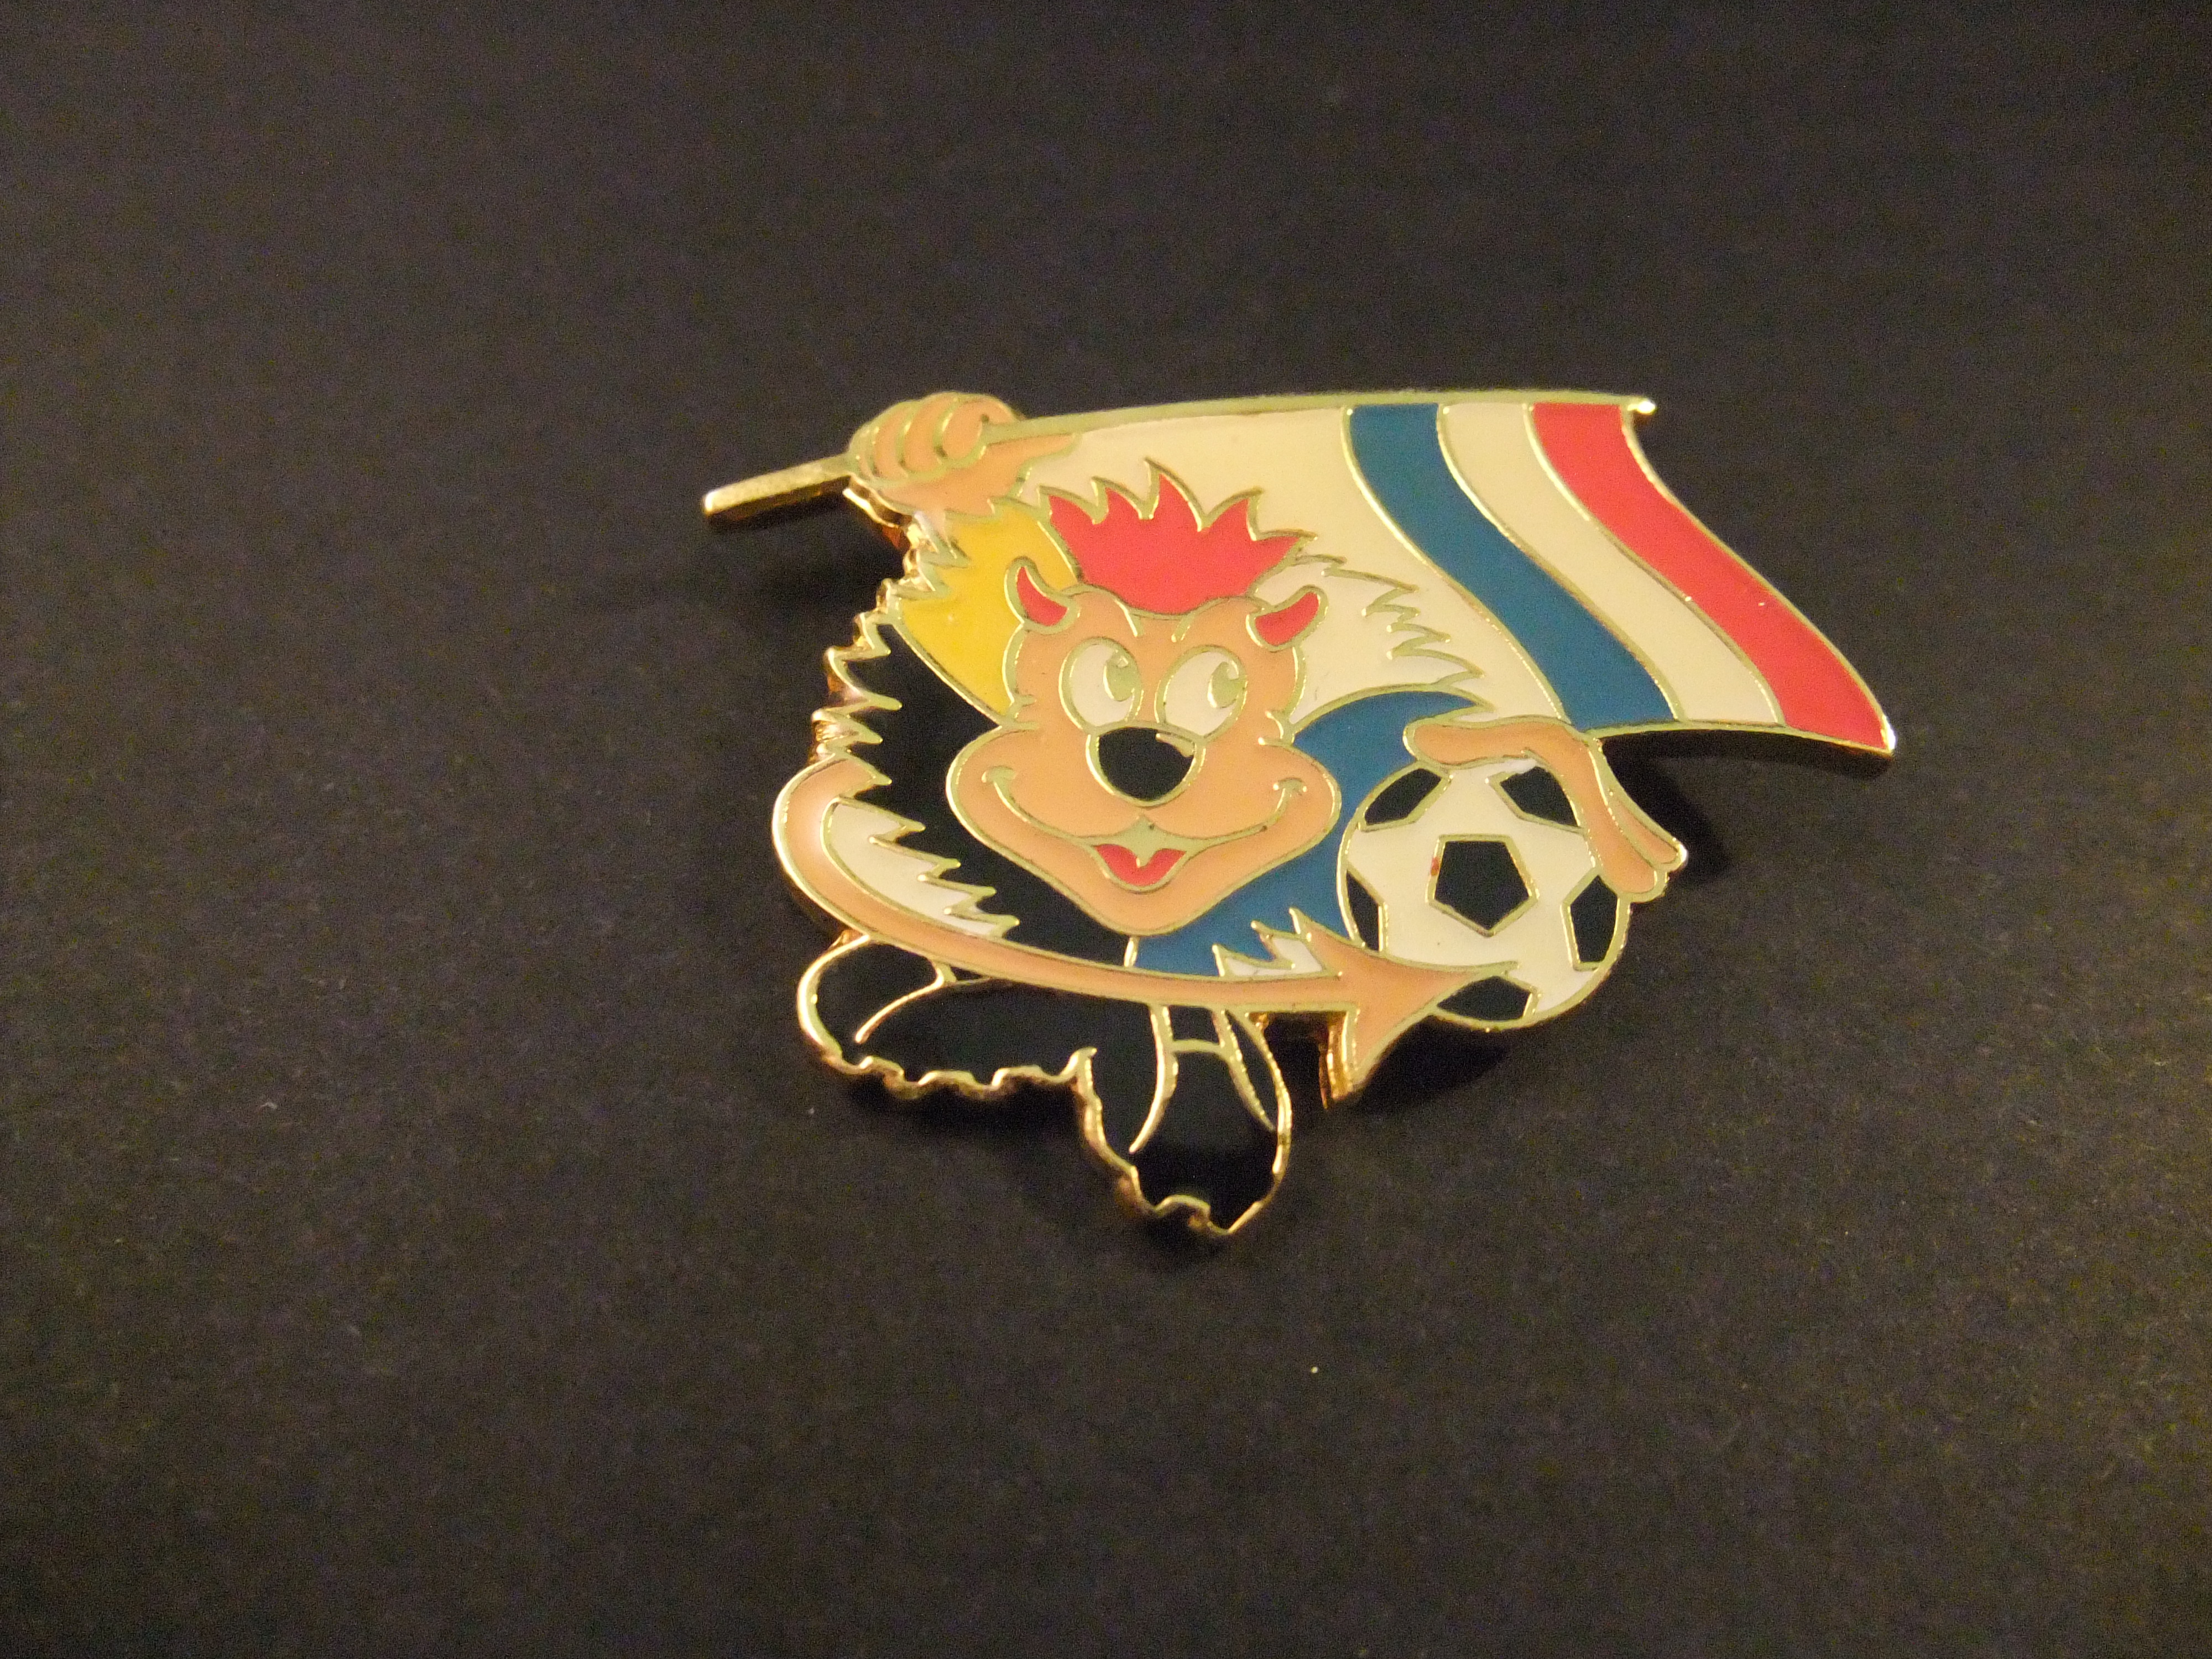 Europees kampioenschap voetbal ( UEFA Euro 2000) België en Nederland mascotte met vlag van Nederland